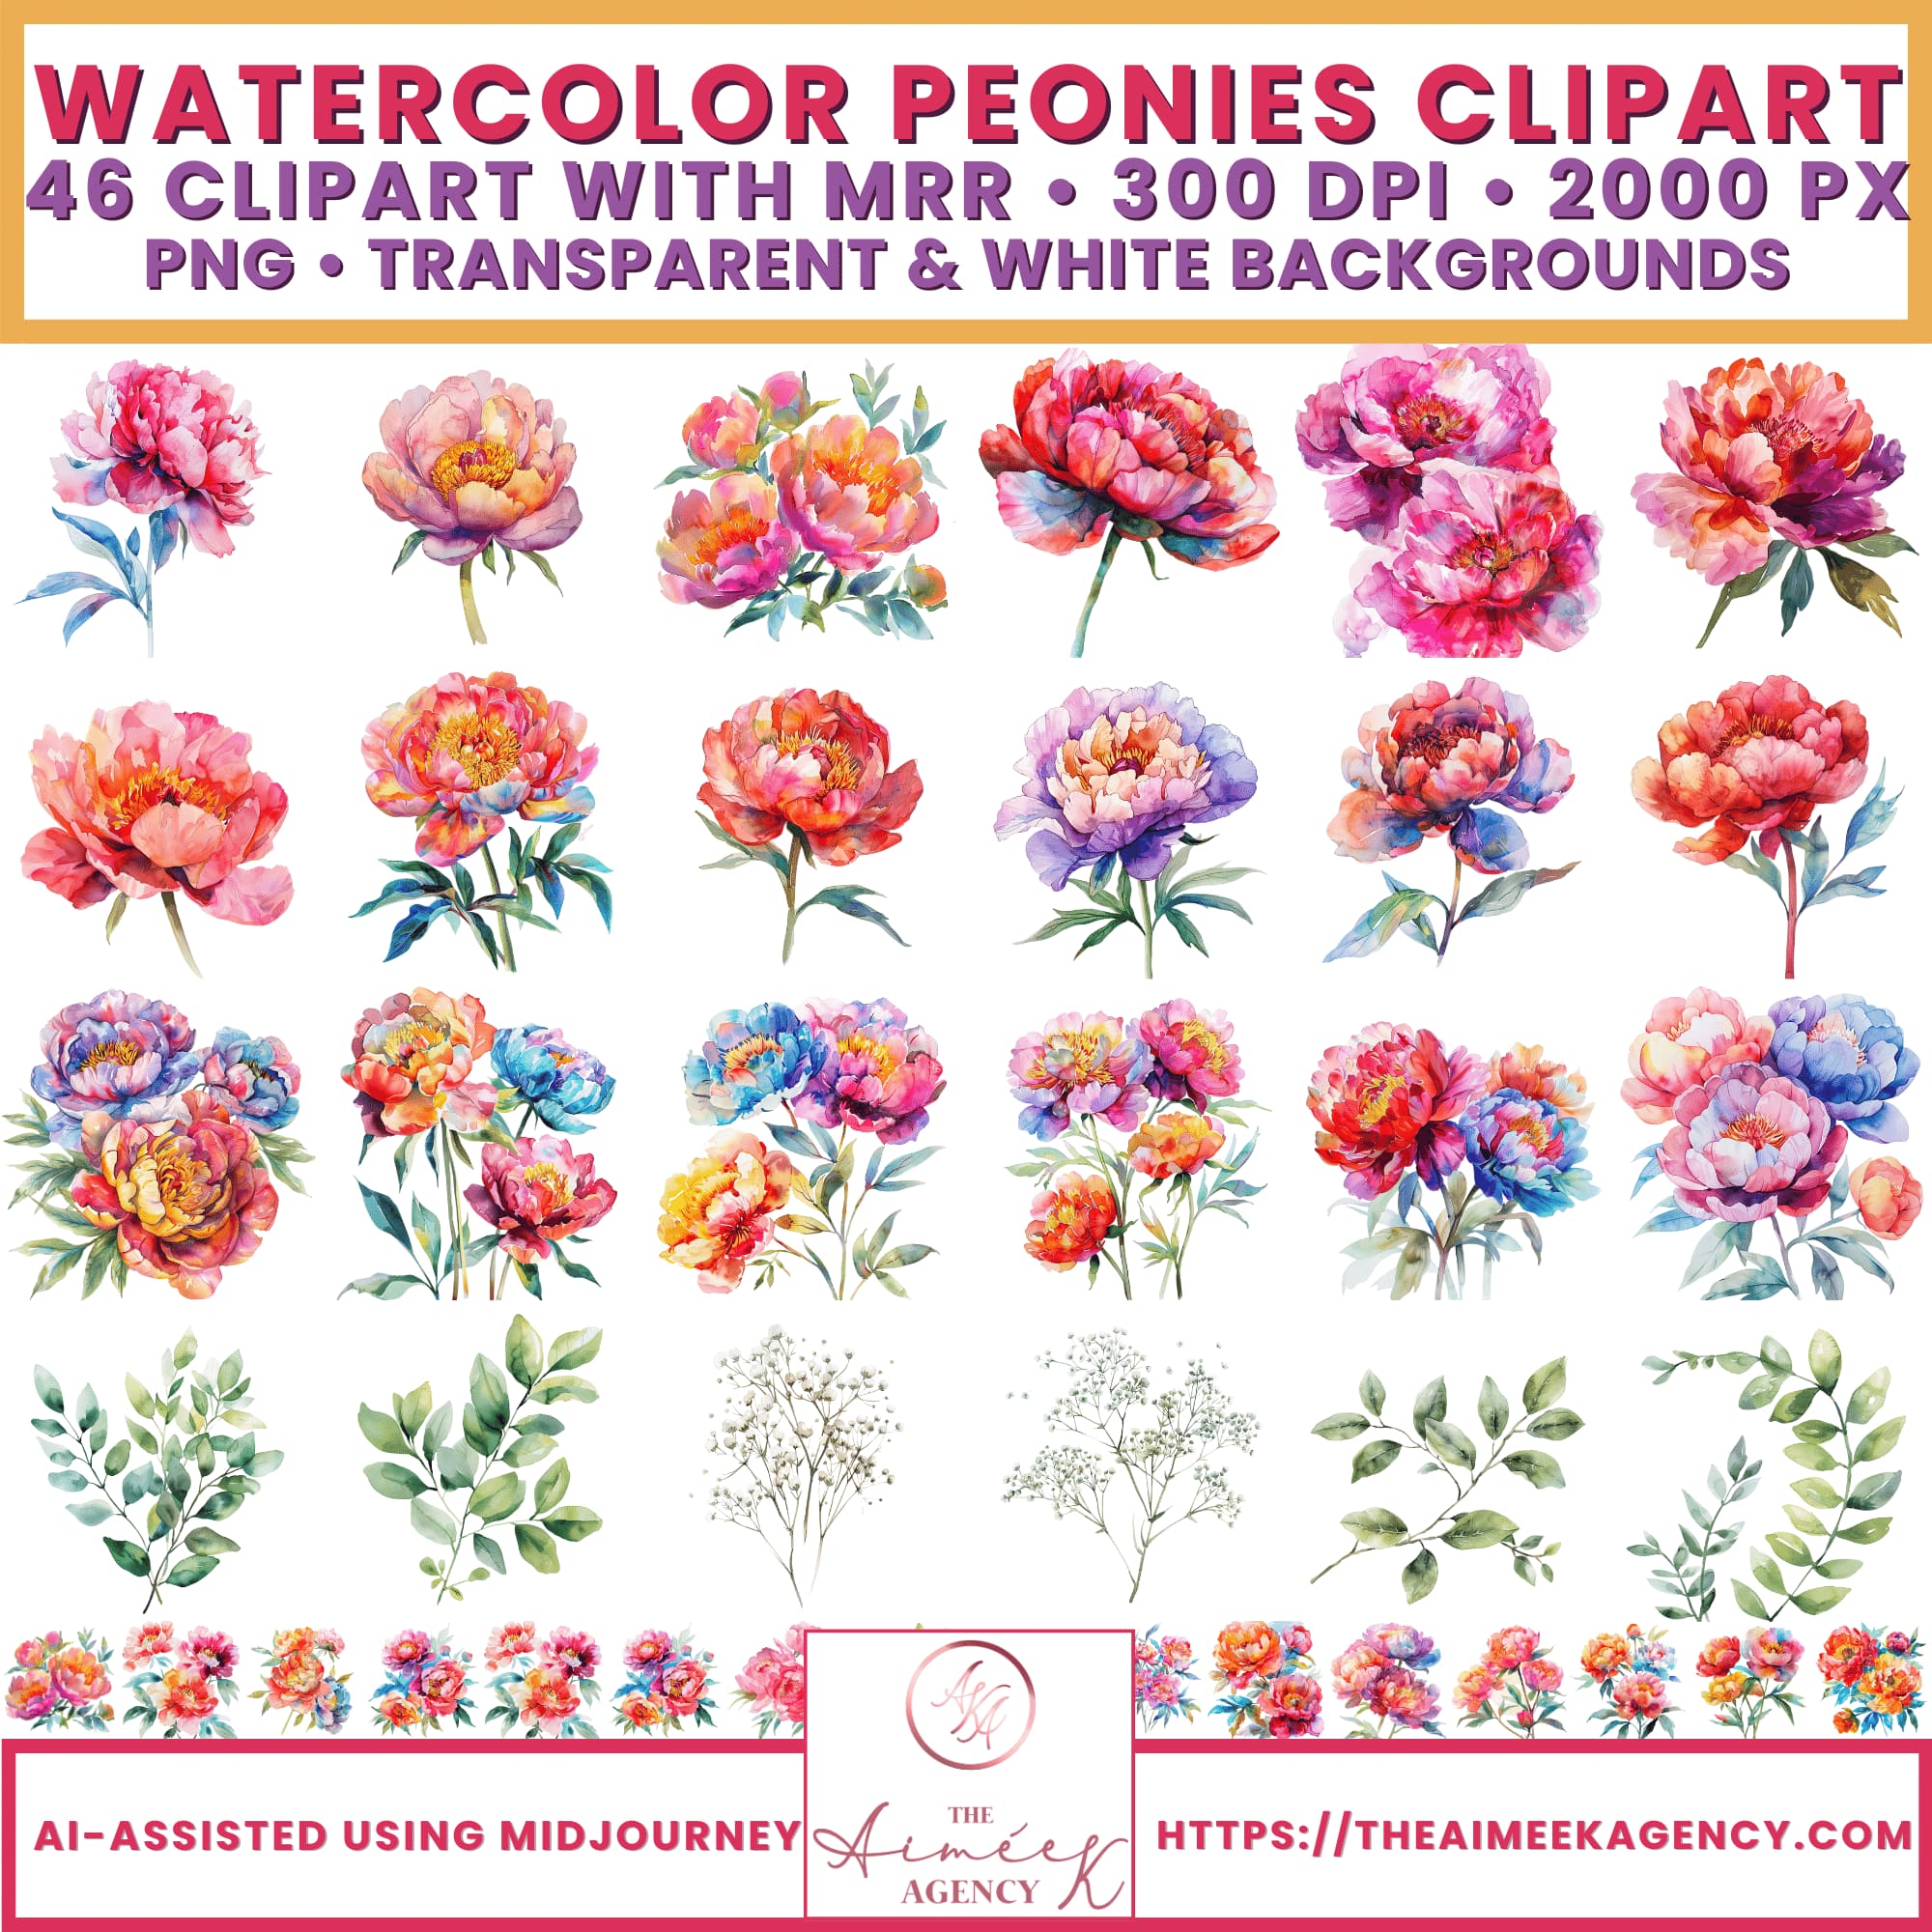 Watercolor Peonies Clipart Pack freebie from The Aimee K Agency